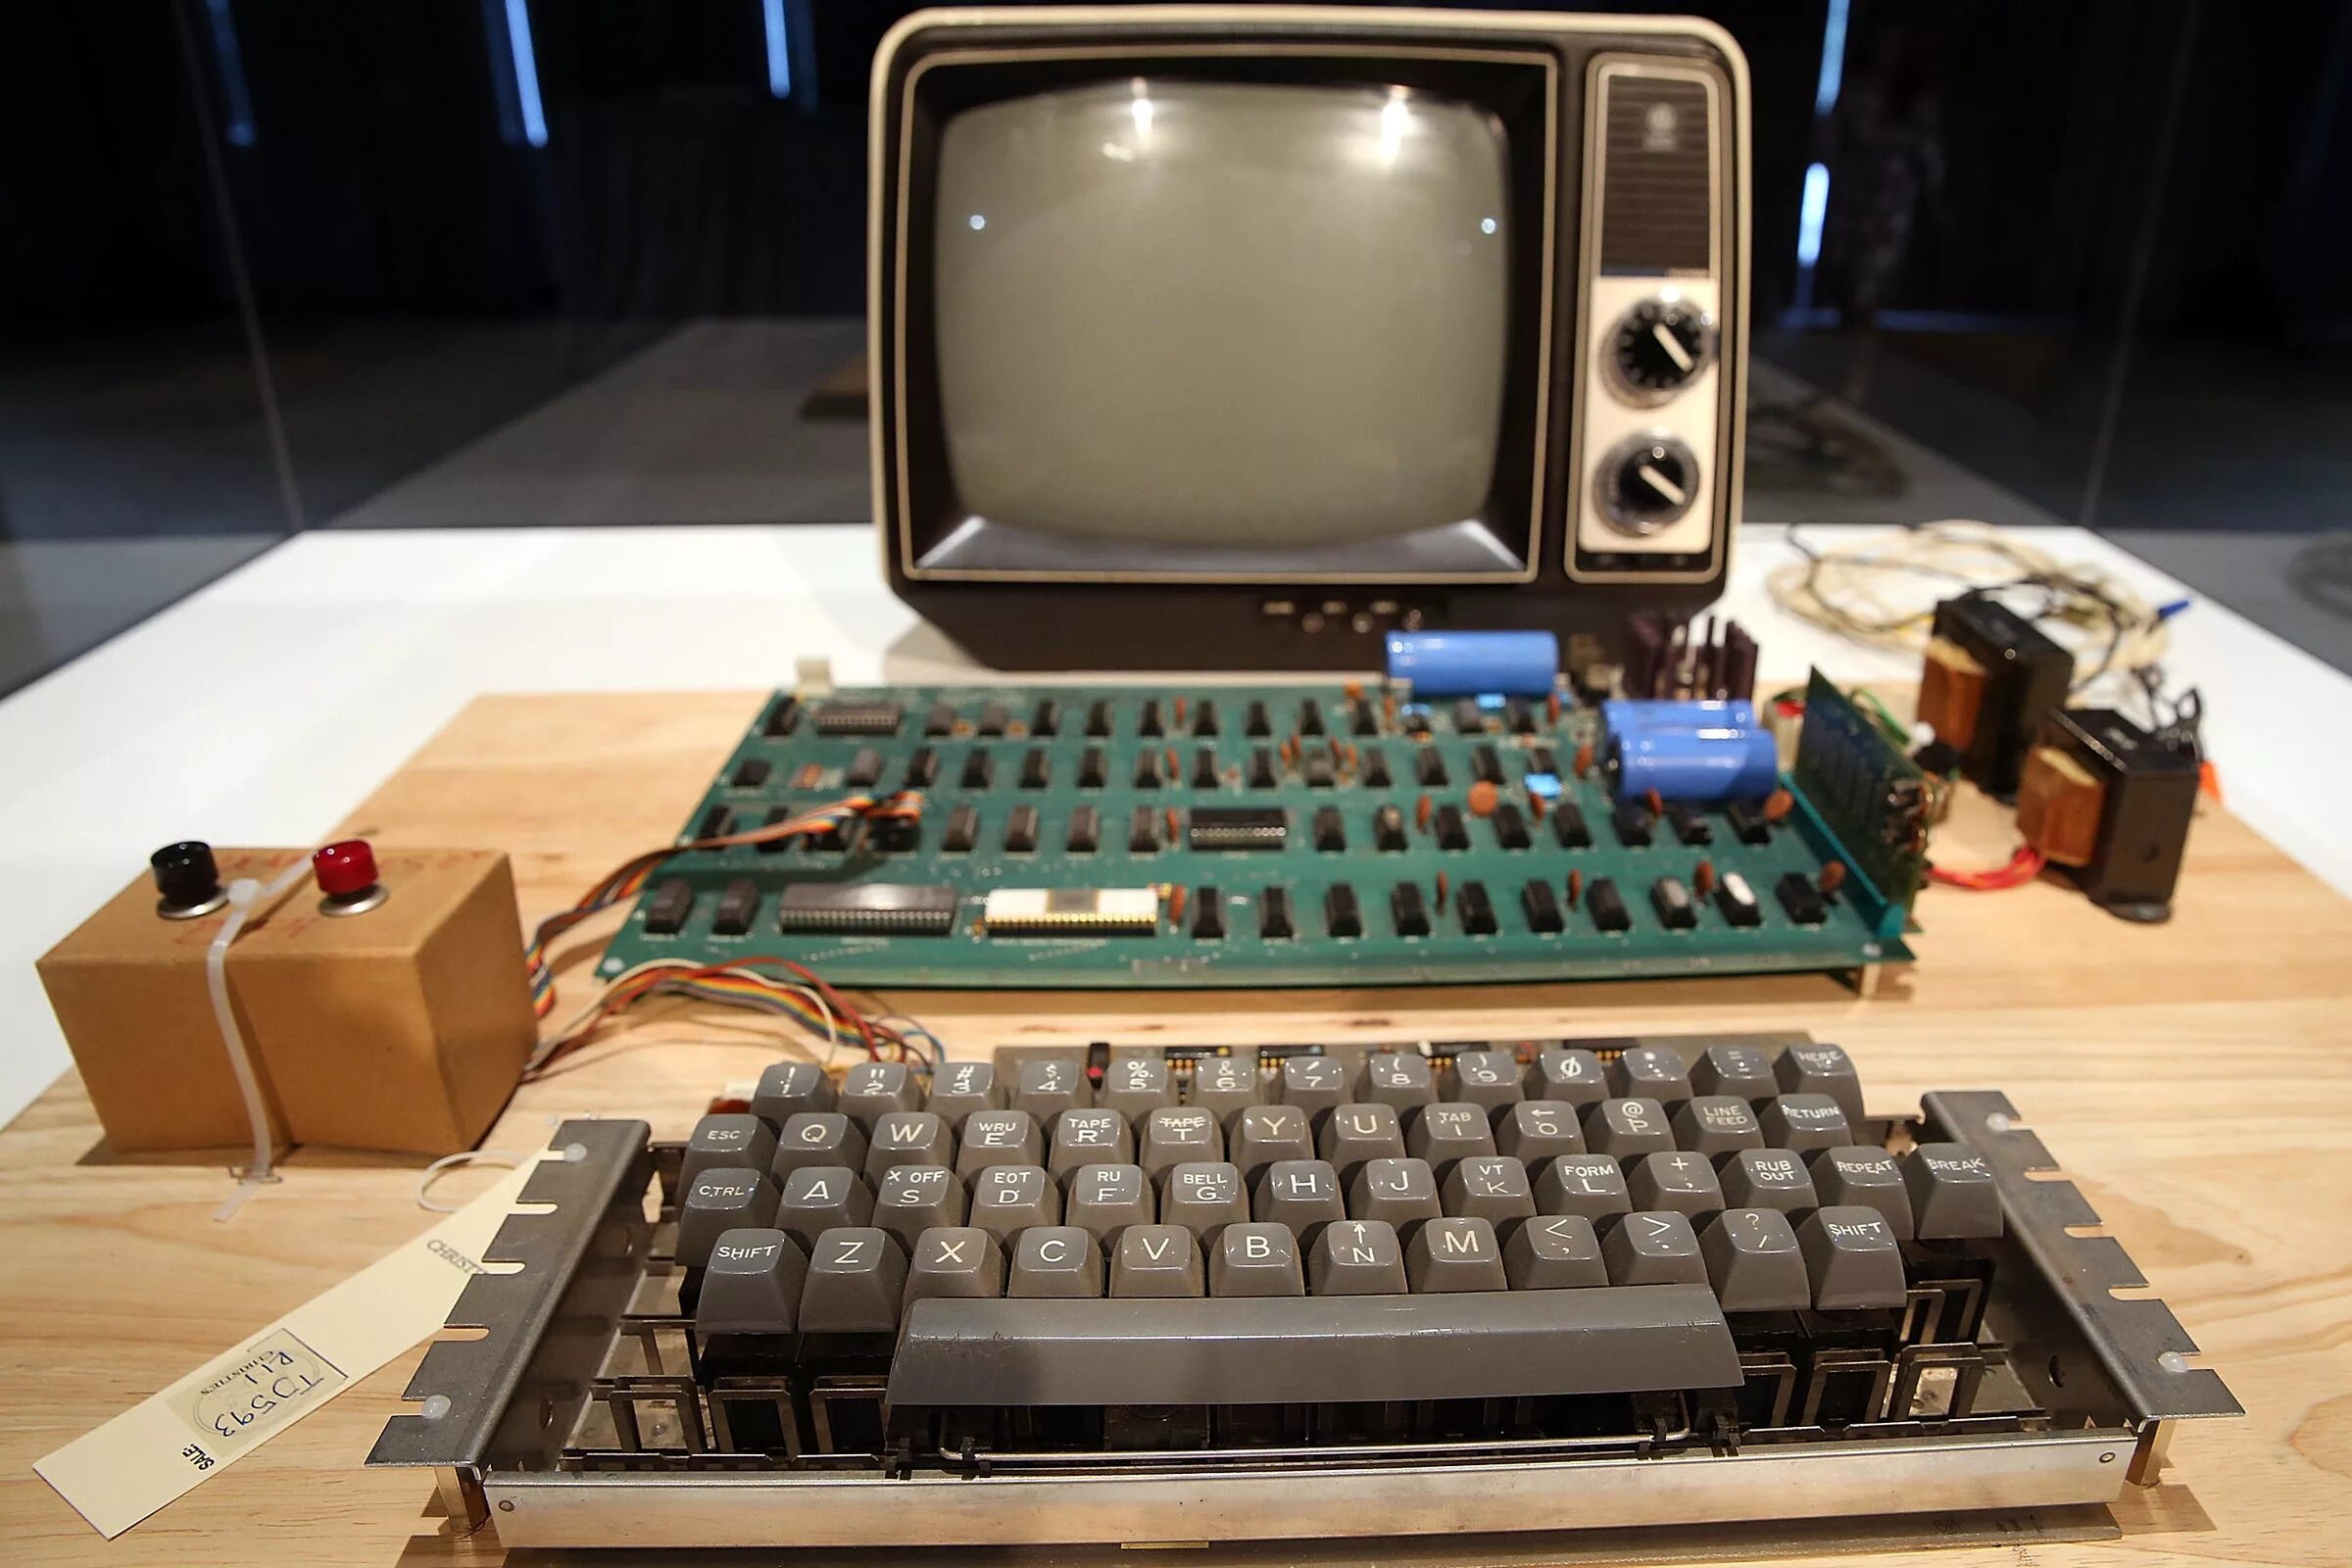 Apple 1 1976. Apple 1 компьютер 1976. Apple 1 компьютер 1976 Стив. Первый компьютер Эппл.